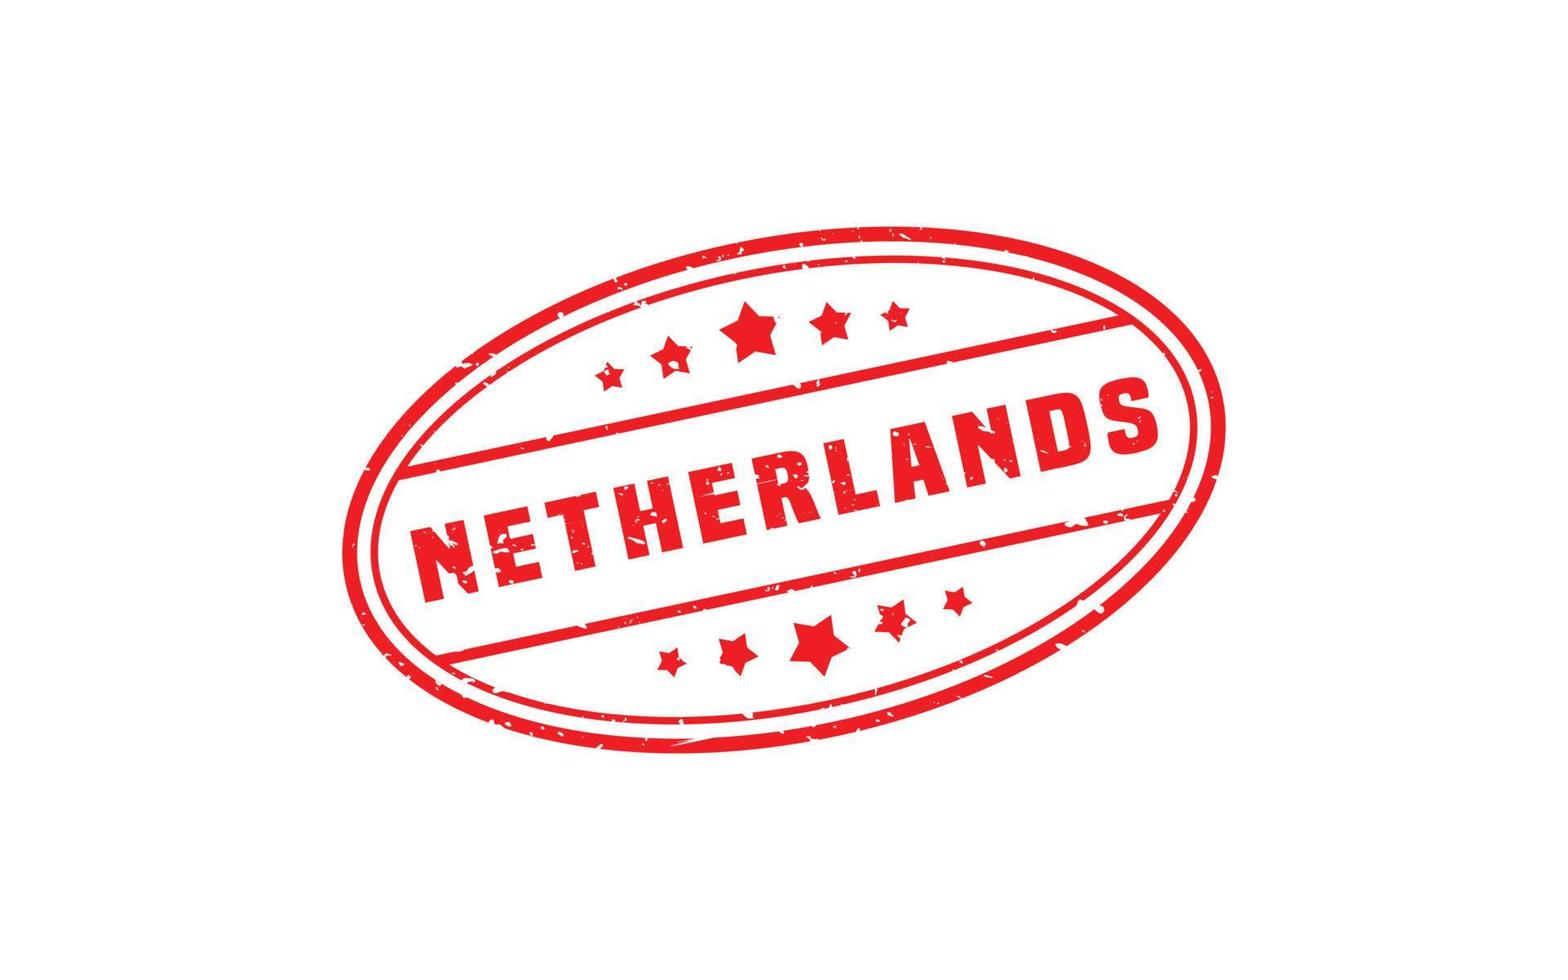 Holanda carimbo de borracha com estilo grunge em fundo branco vetor